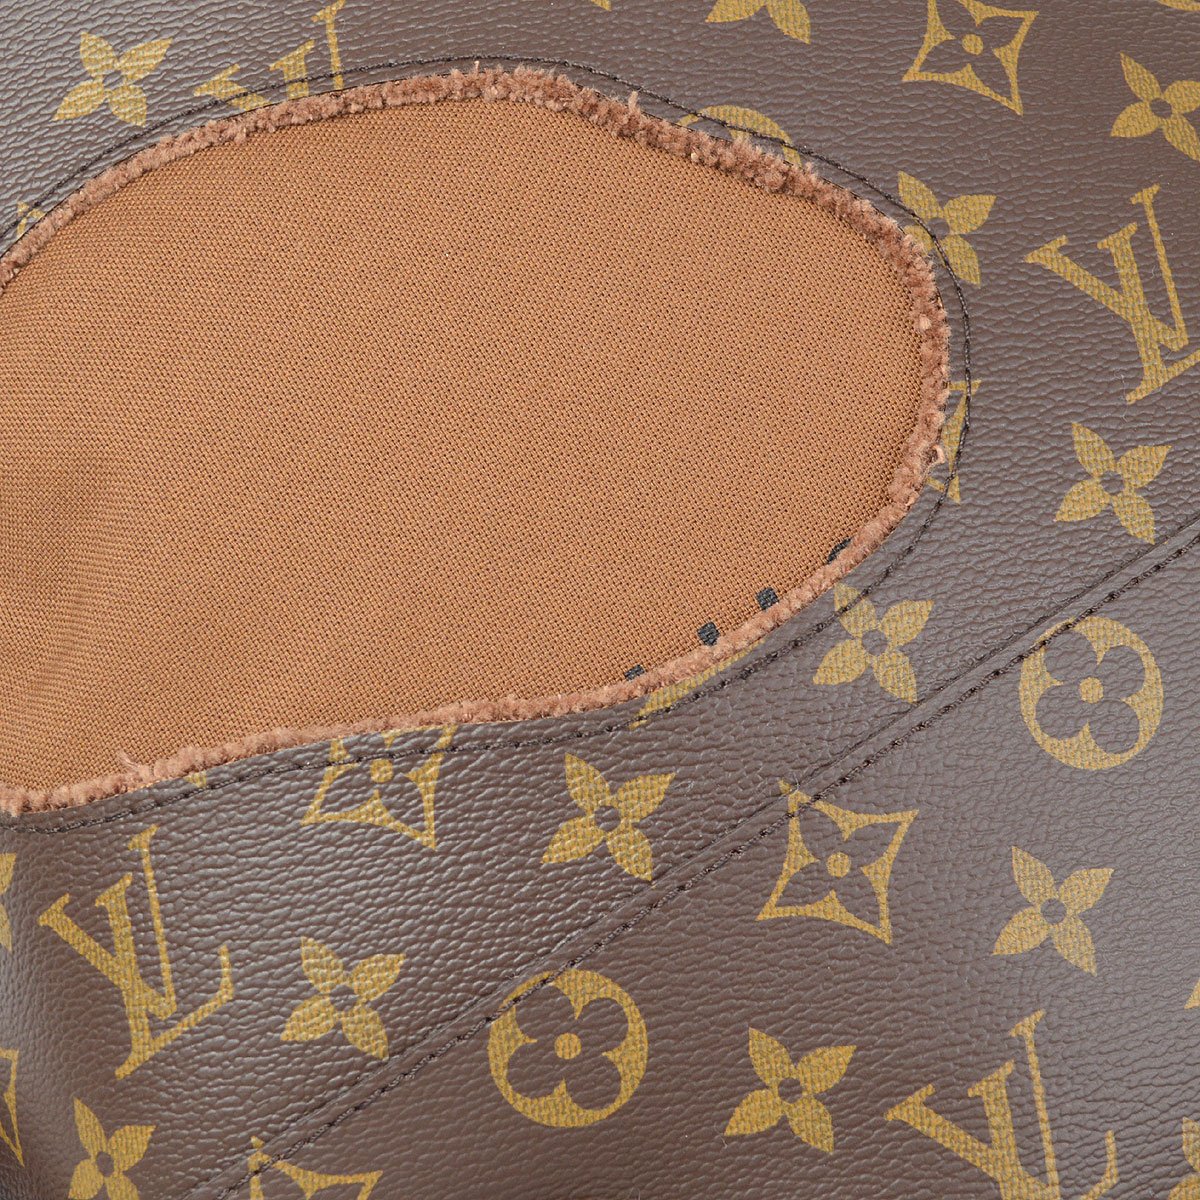 Rei Kawakubo burns the Louis Vuitton Monogram bag